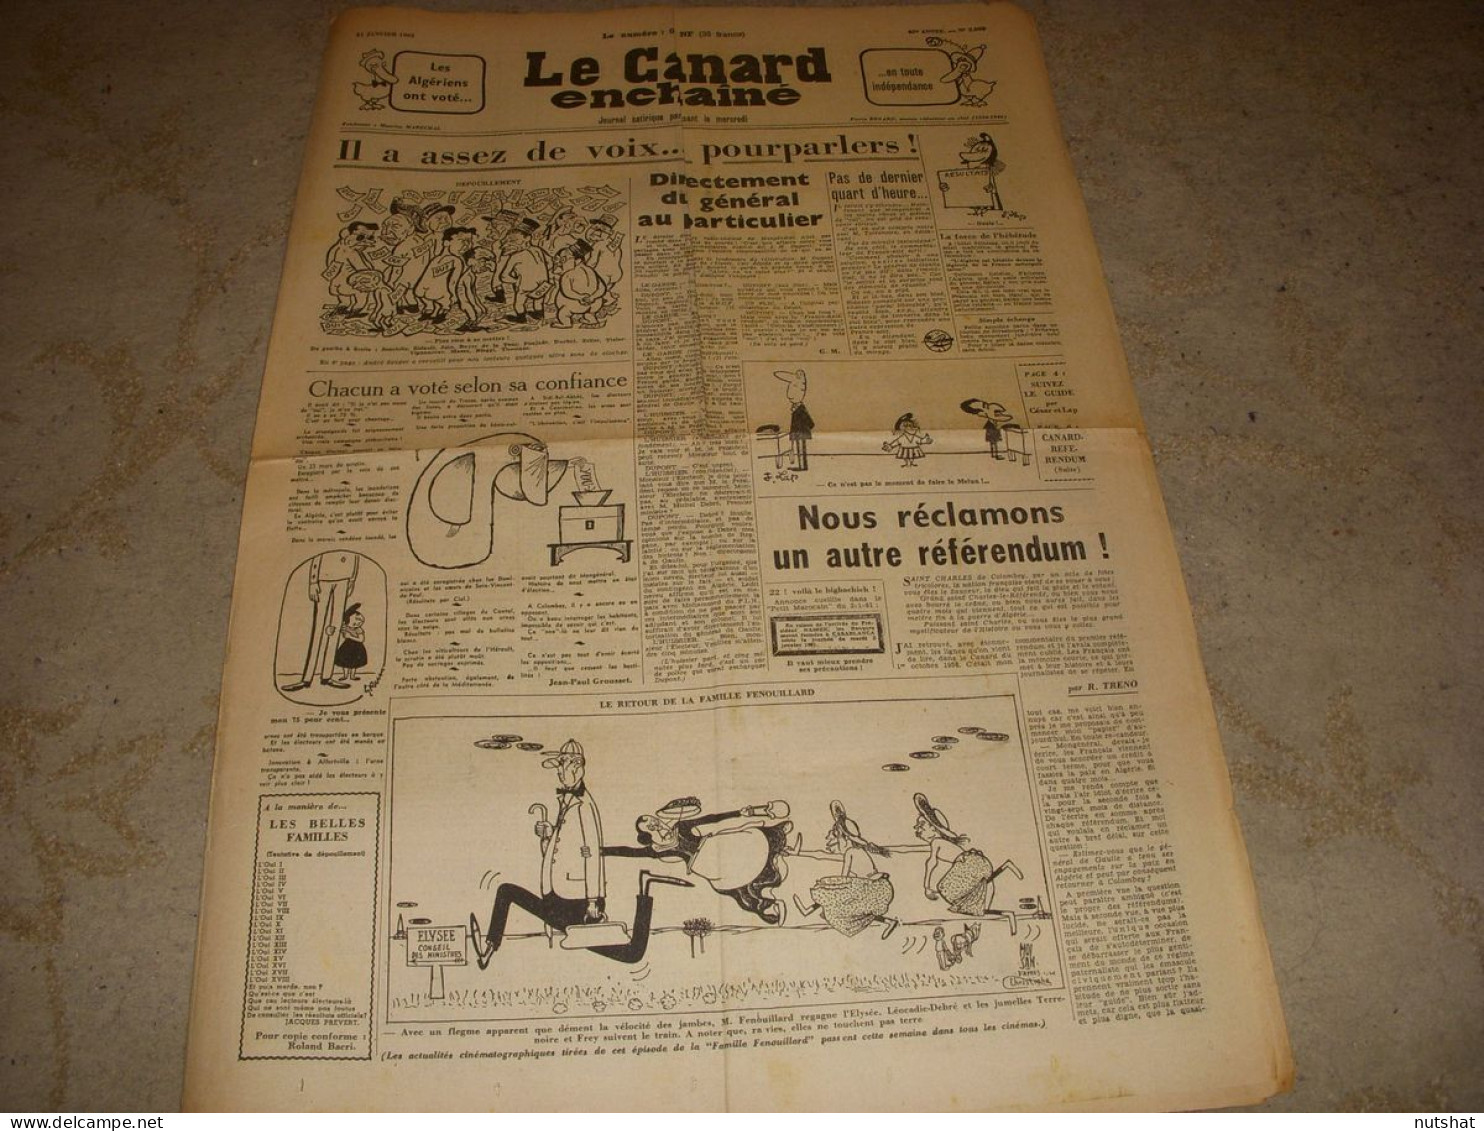 CANARD ENCHAINE 2099 11.01.1961 Jean Christophe AVERTY Jacques SALLEBERT - Politics